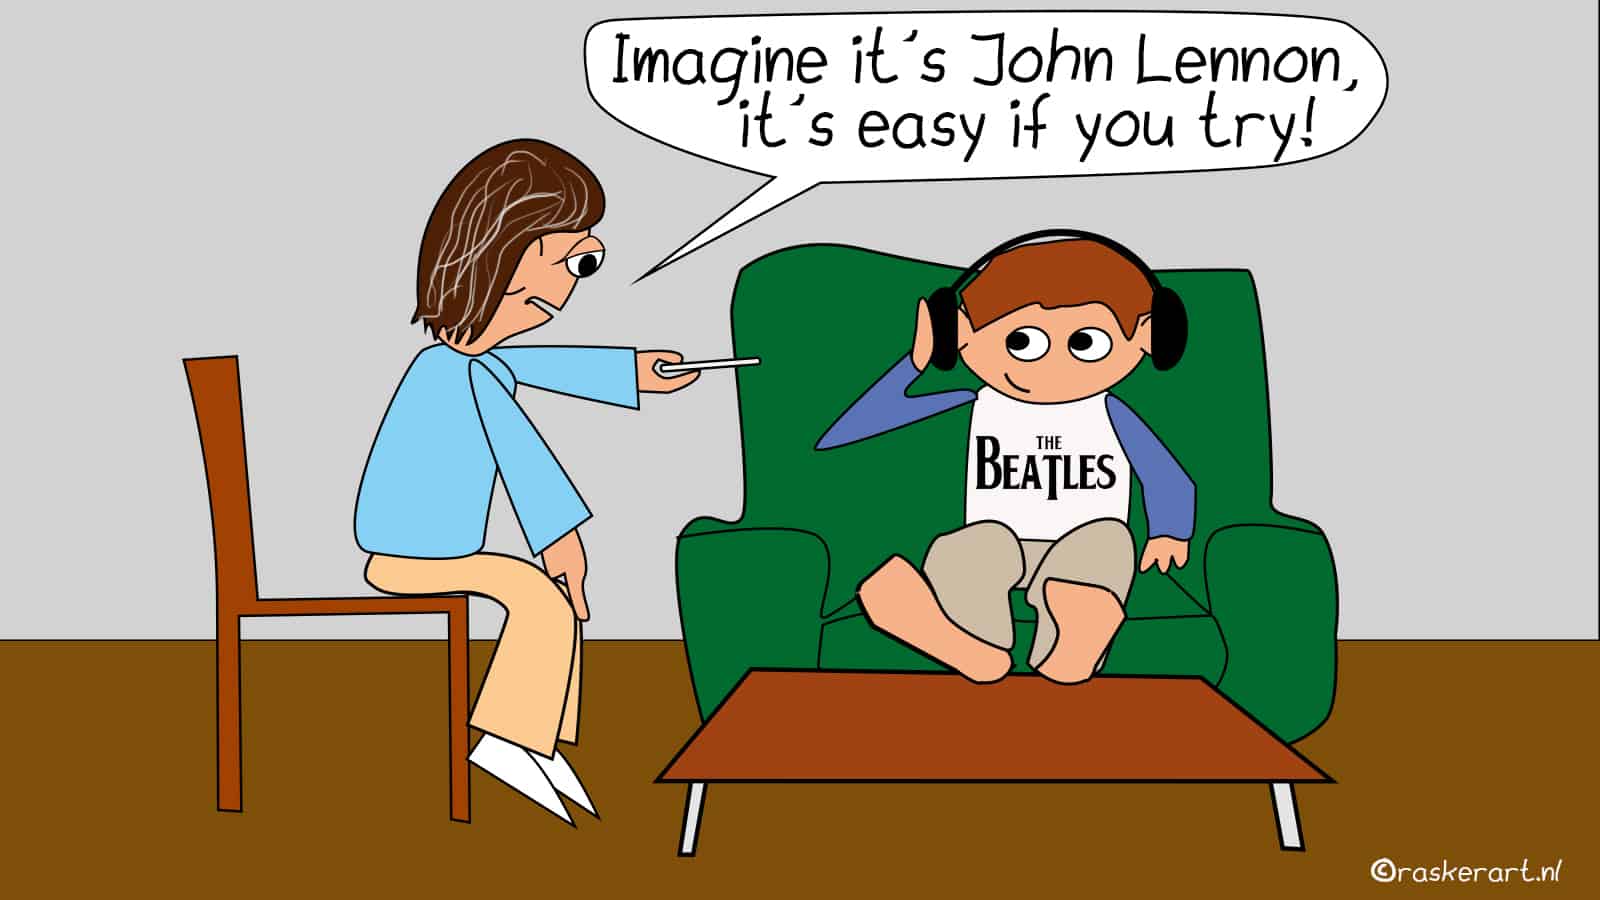 Imagine it's John Lennon - it's easy if you try?